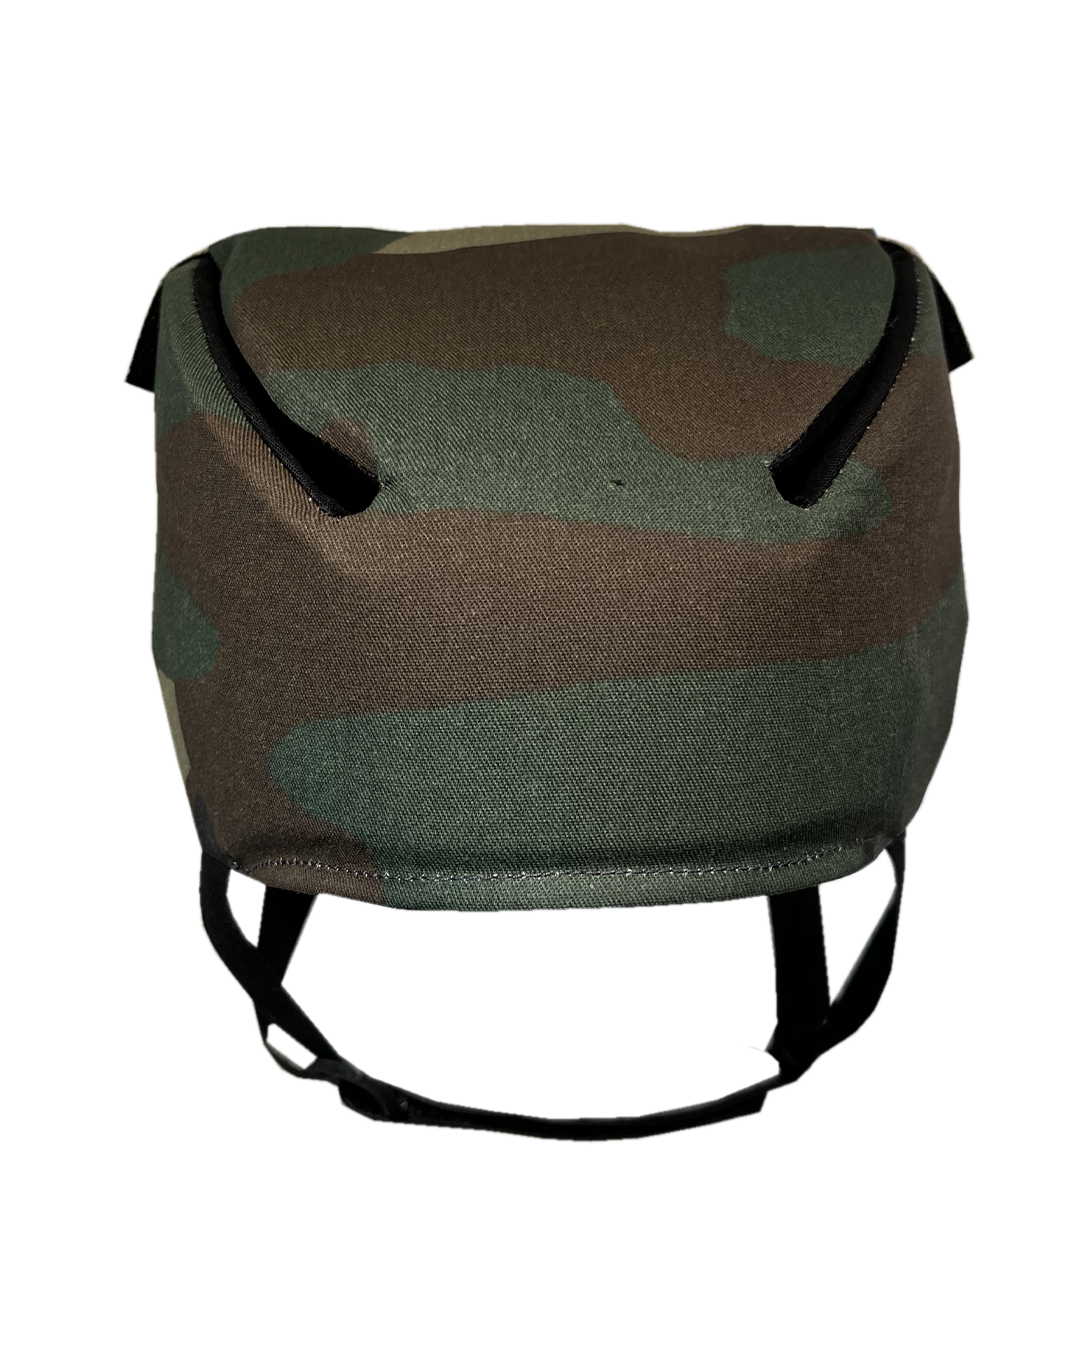 Basic camouflage baby helmet